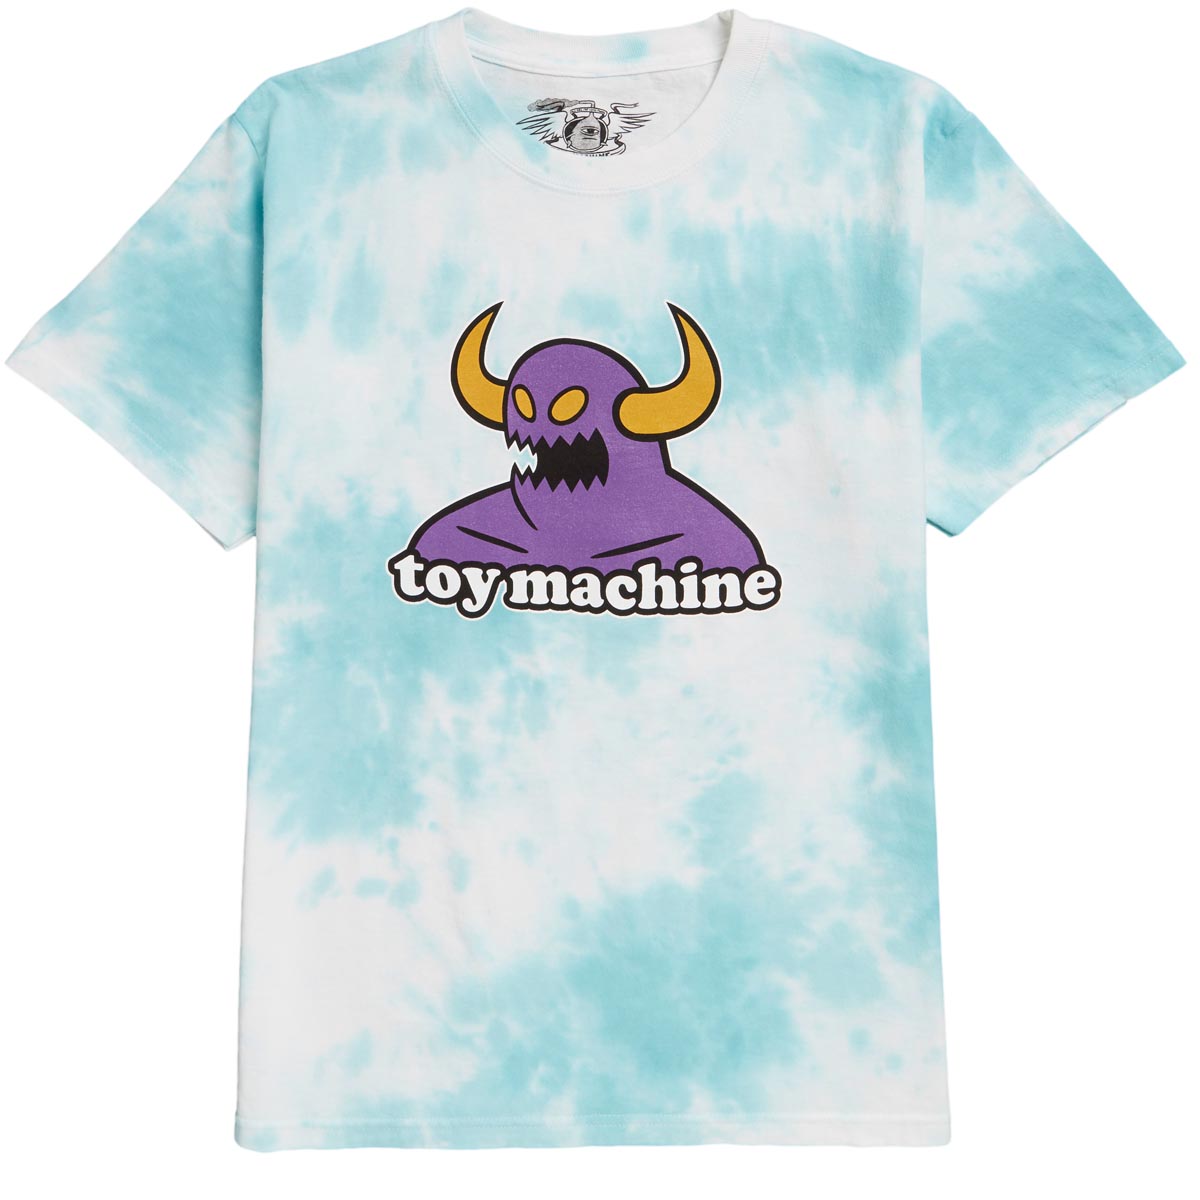 Toy Machine Monster Tye Dye T-Shirt - Blue image 1